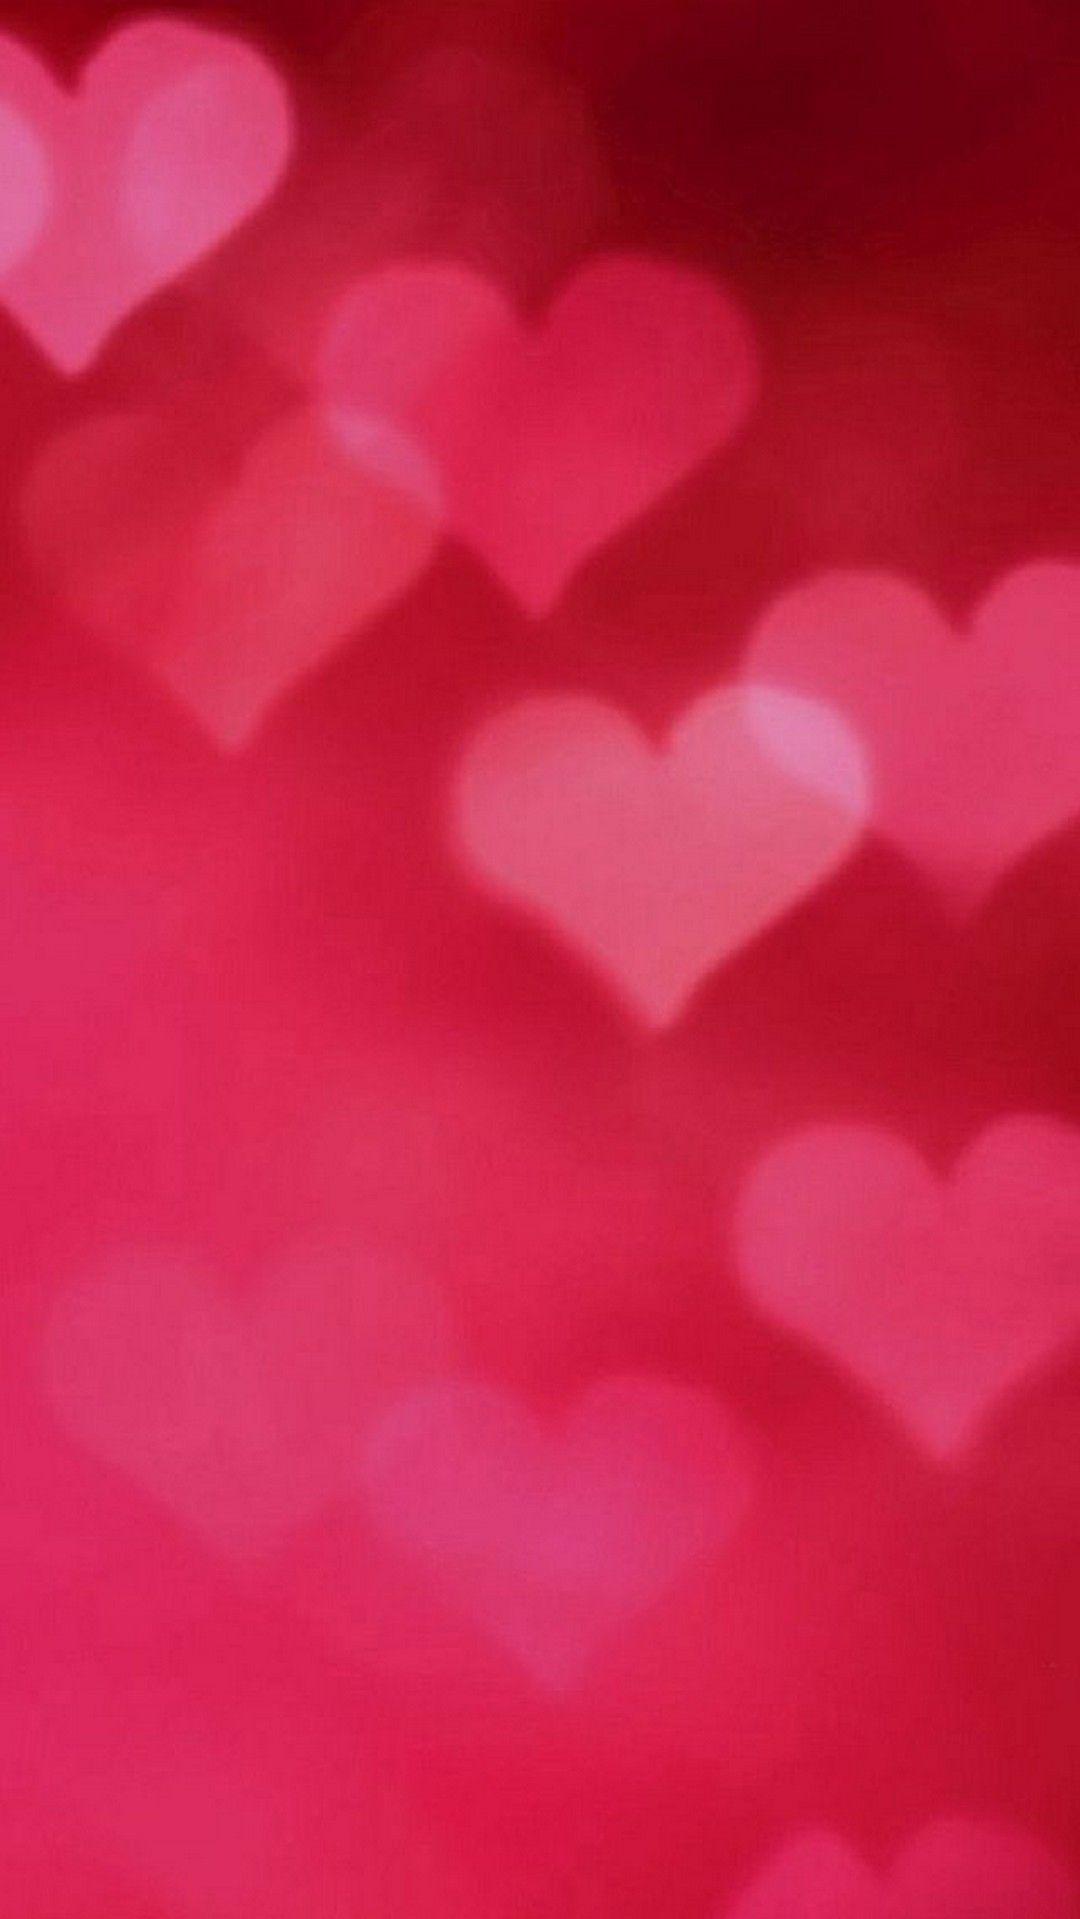 Valentine iPhone Wallpaper On